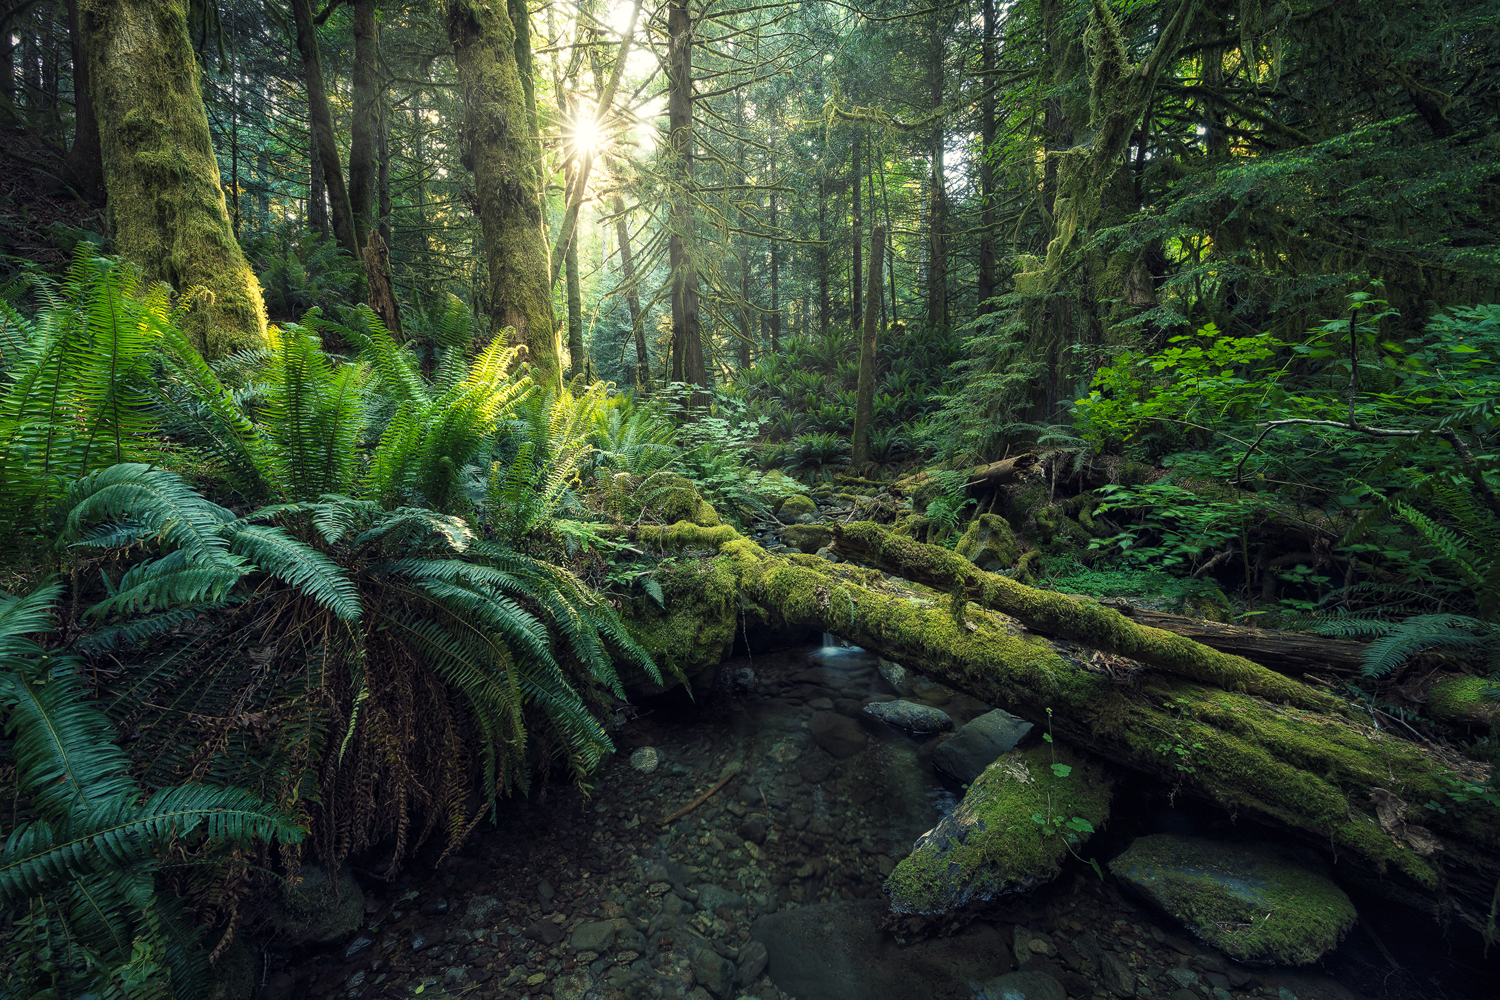 Forest myths